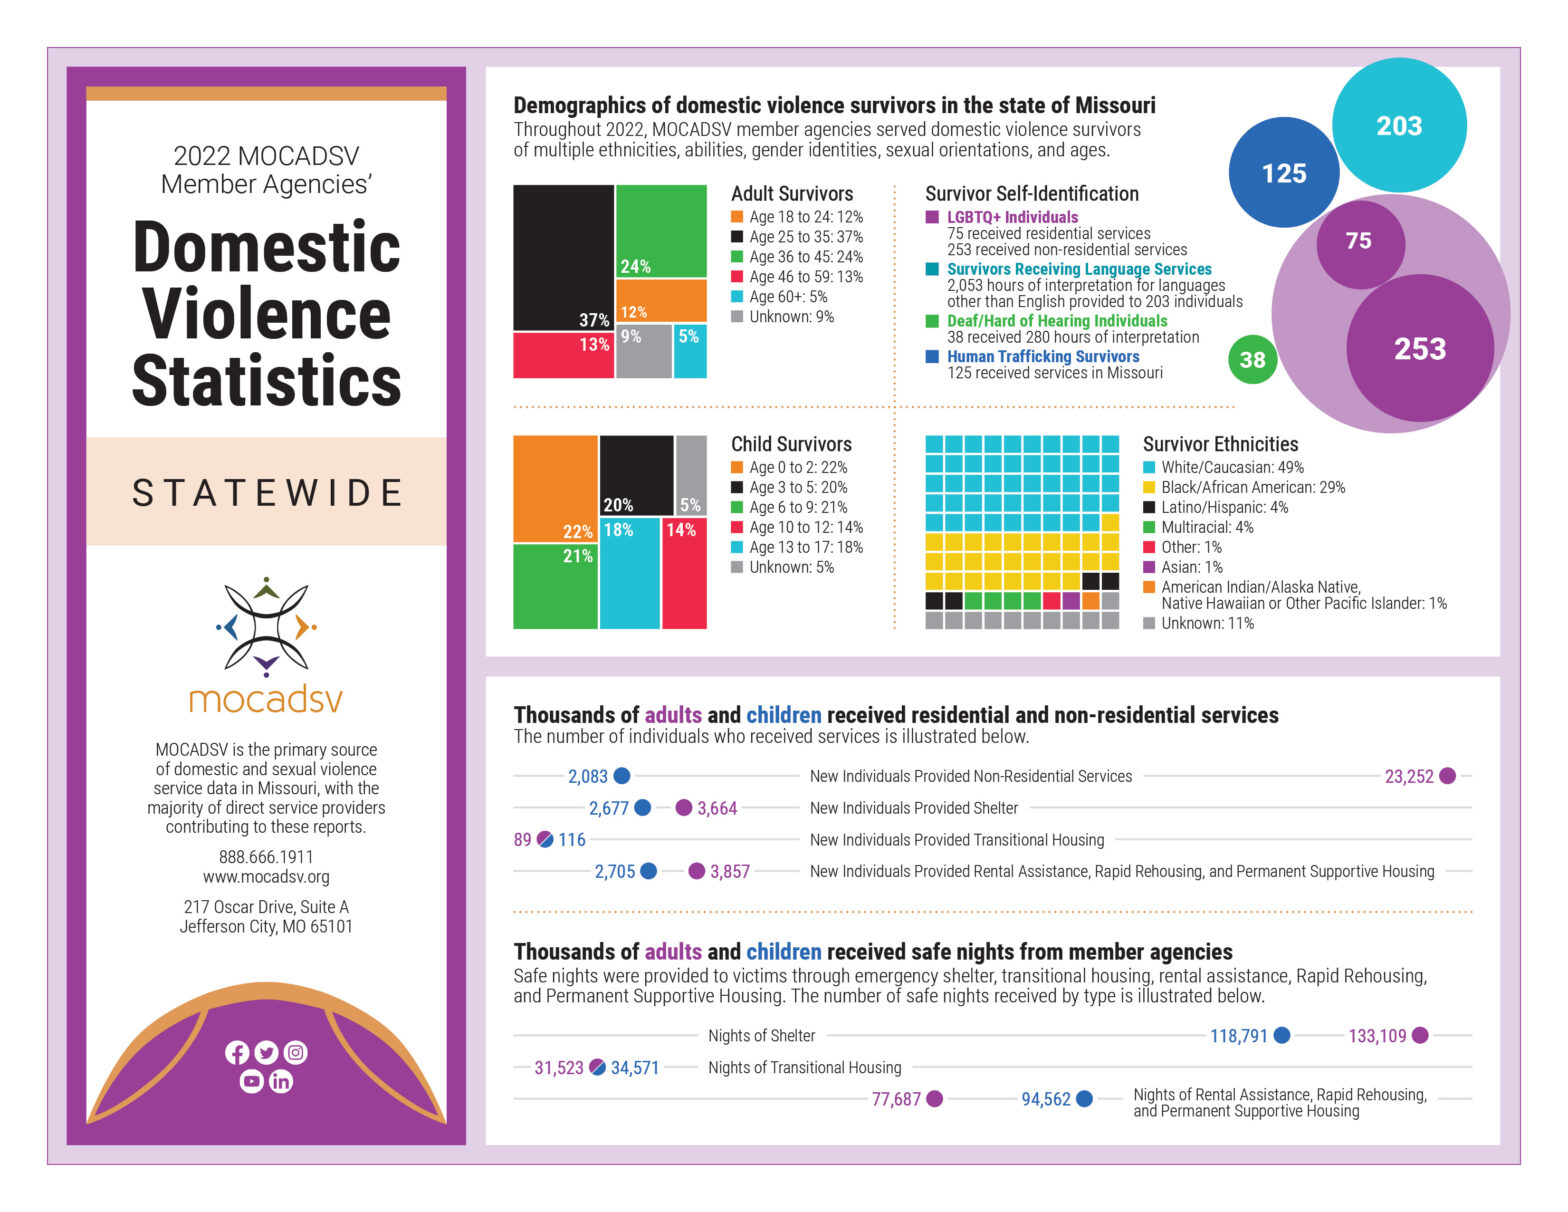 Statewide Domestic Violence Statistics